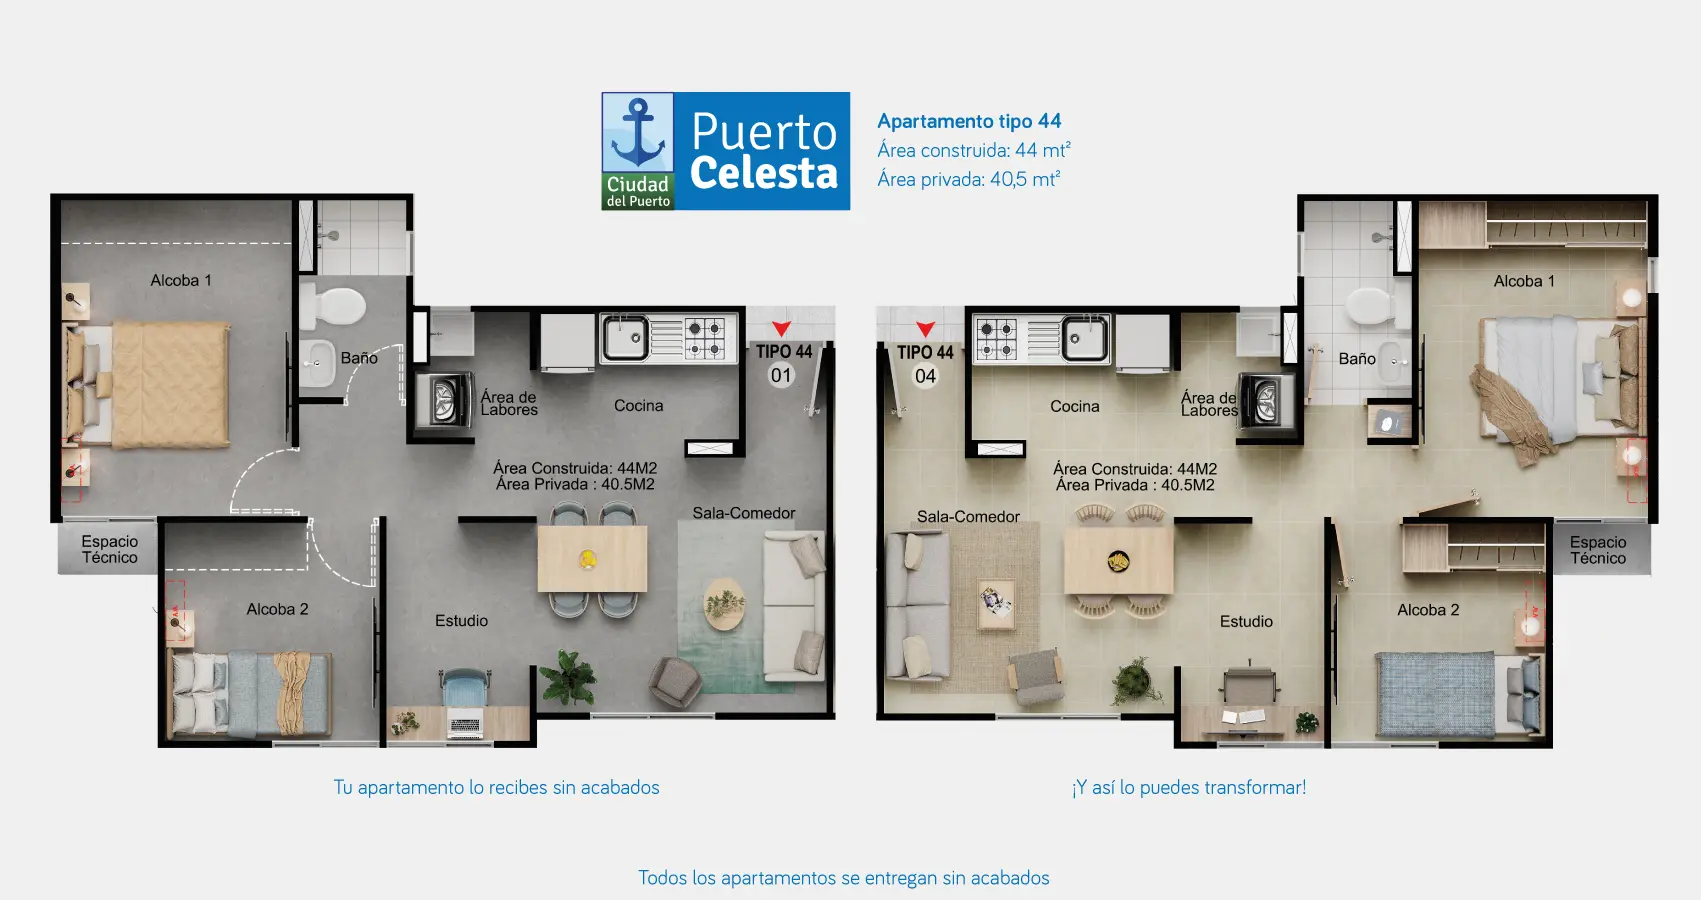 Apartamento tipo 44 - Puerto Celesta